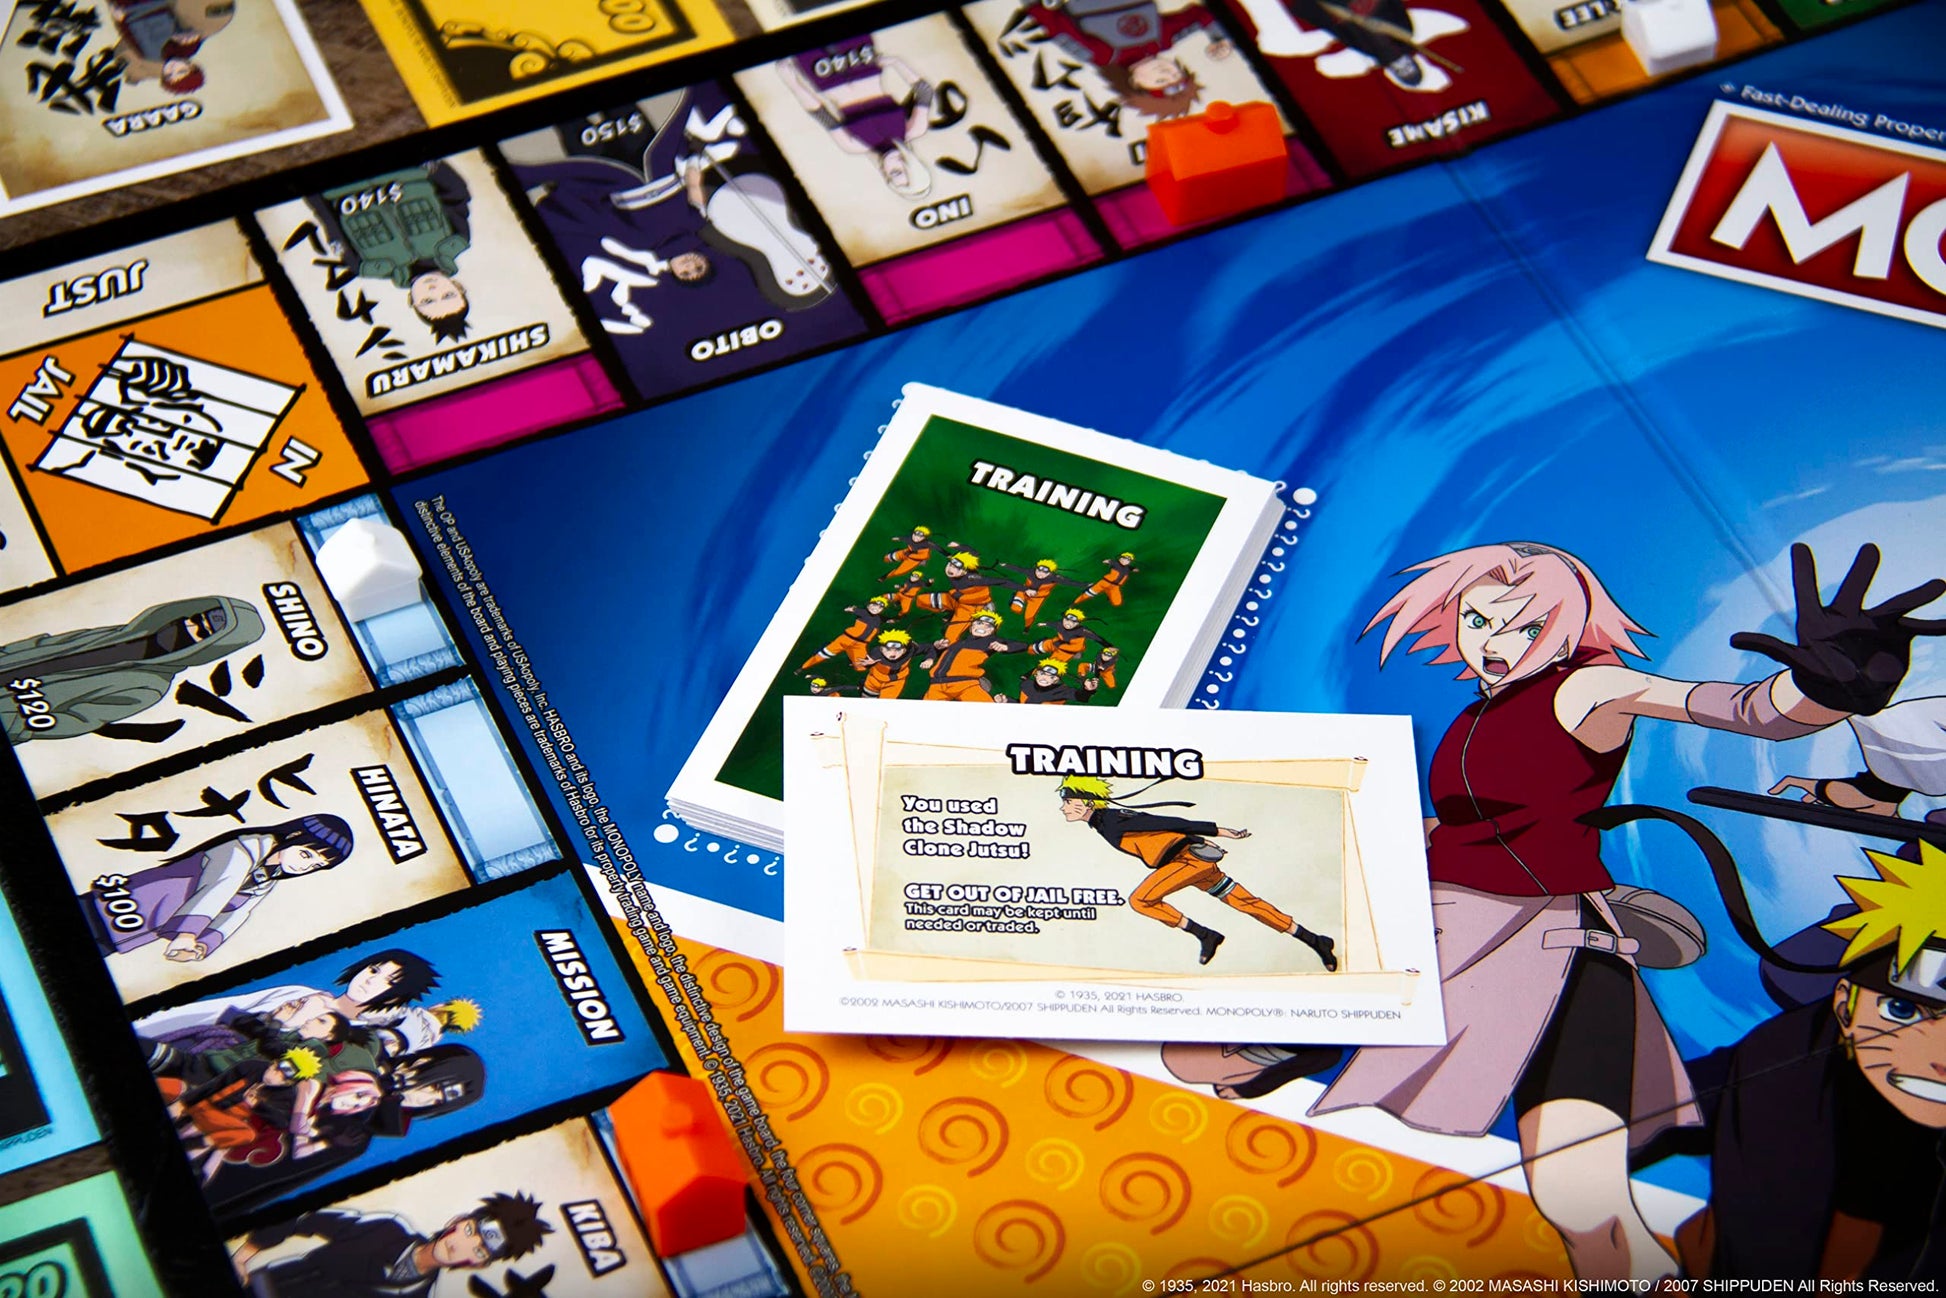 Monopoly Naruto - Zippigames